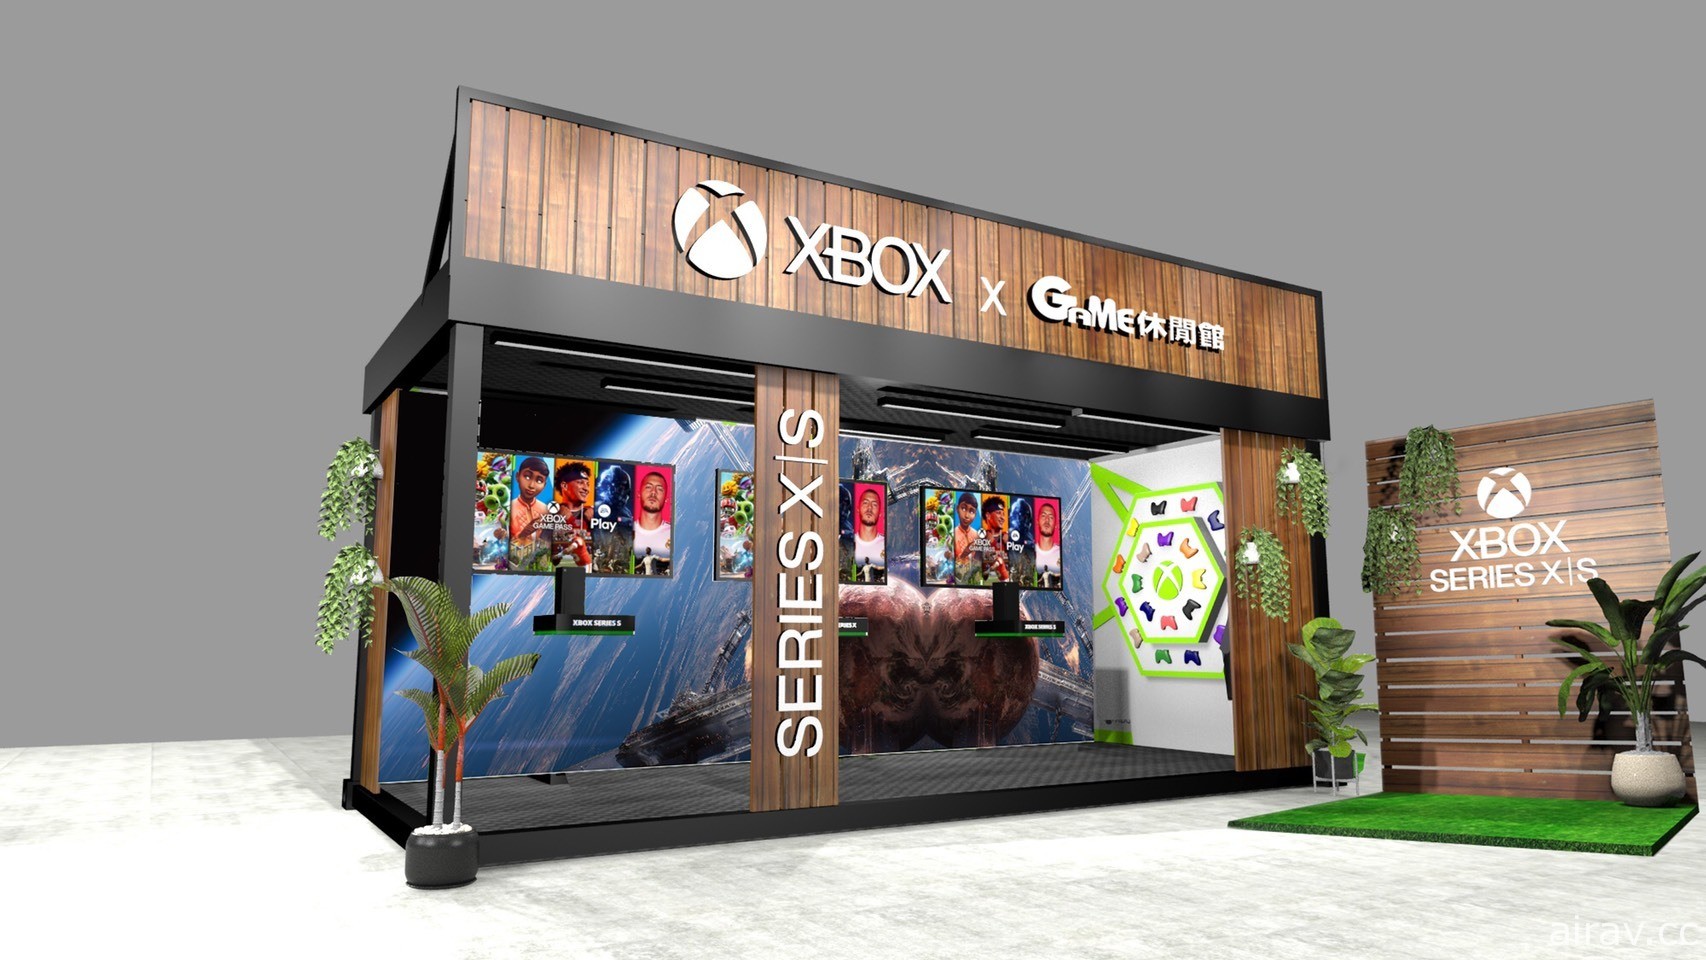 Xbox Series X | S 台灣首賣會 11/9 北中南三地同步登場 全球獨家紀念品限量送